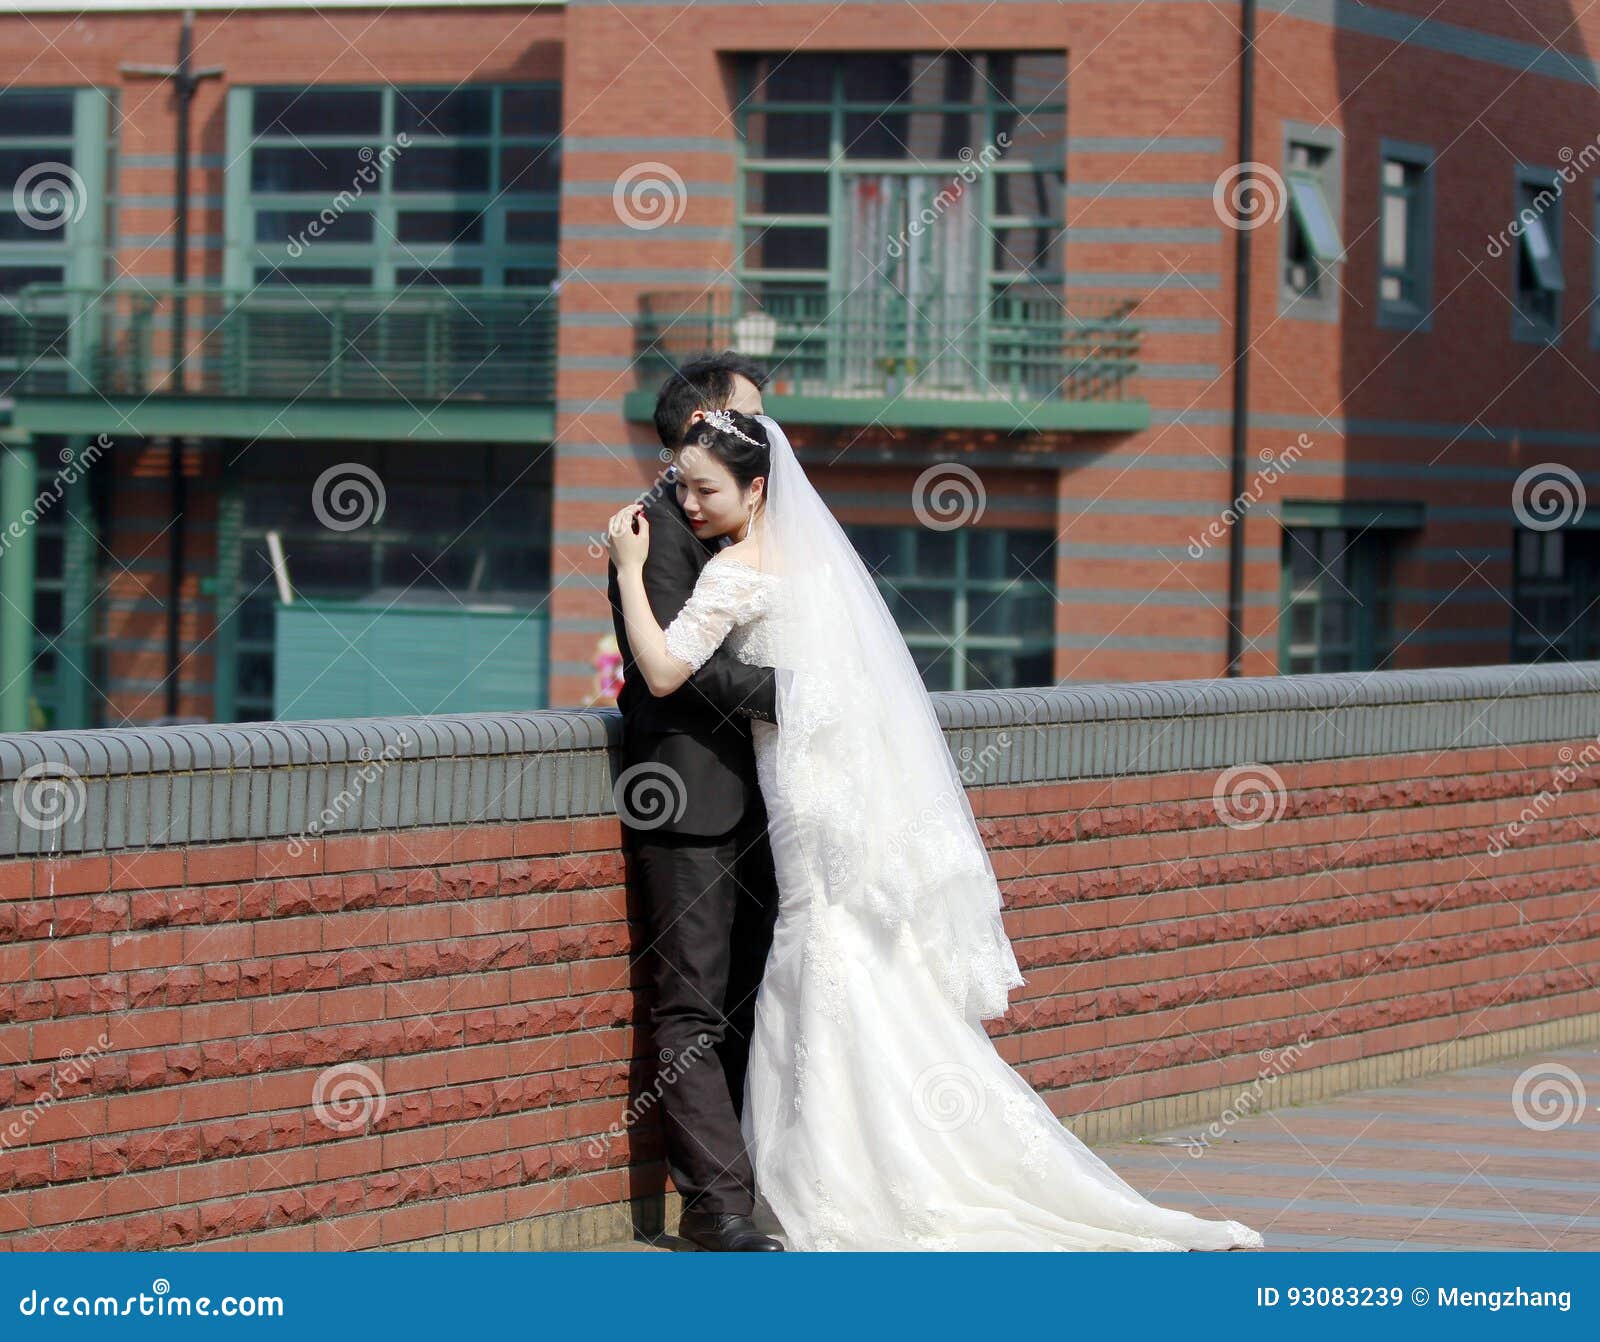 Chinese Bride And Groom Wedding Couple Girl Bride In Wedding Dress